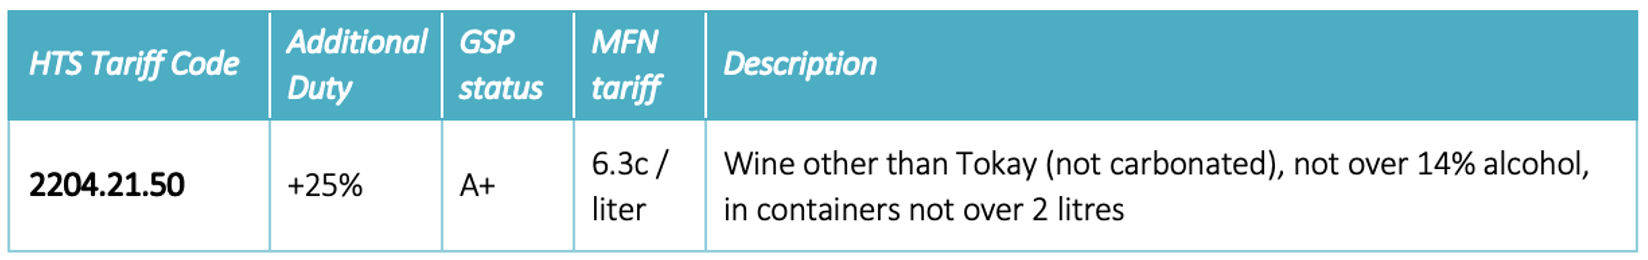 Wine HTS tariff code 2204.21.50 April 2021